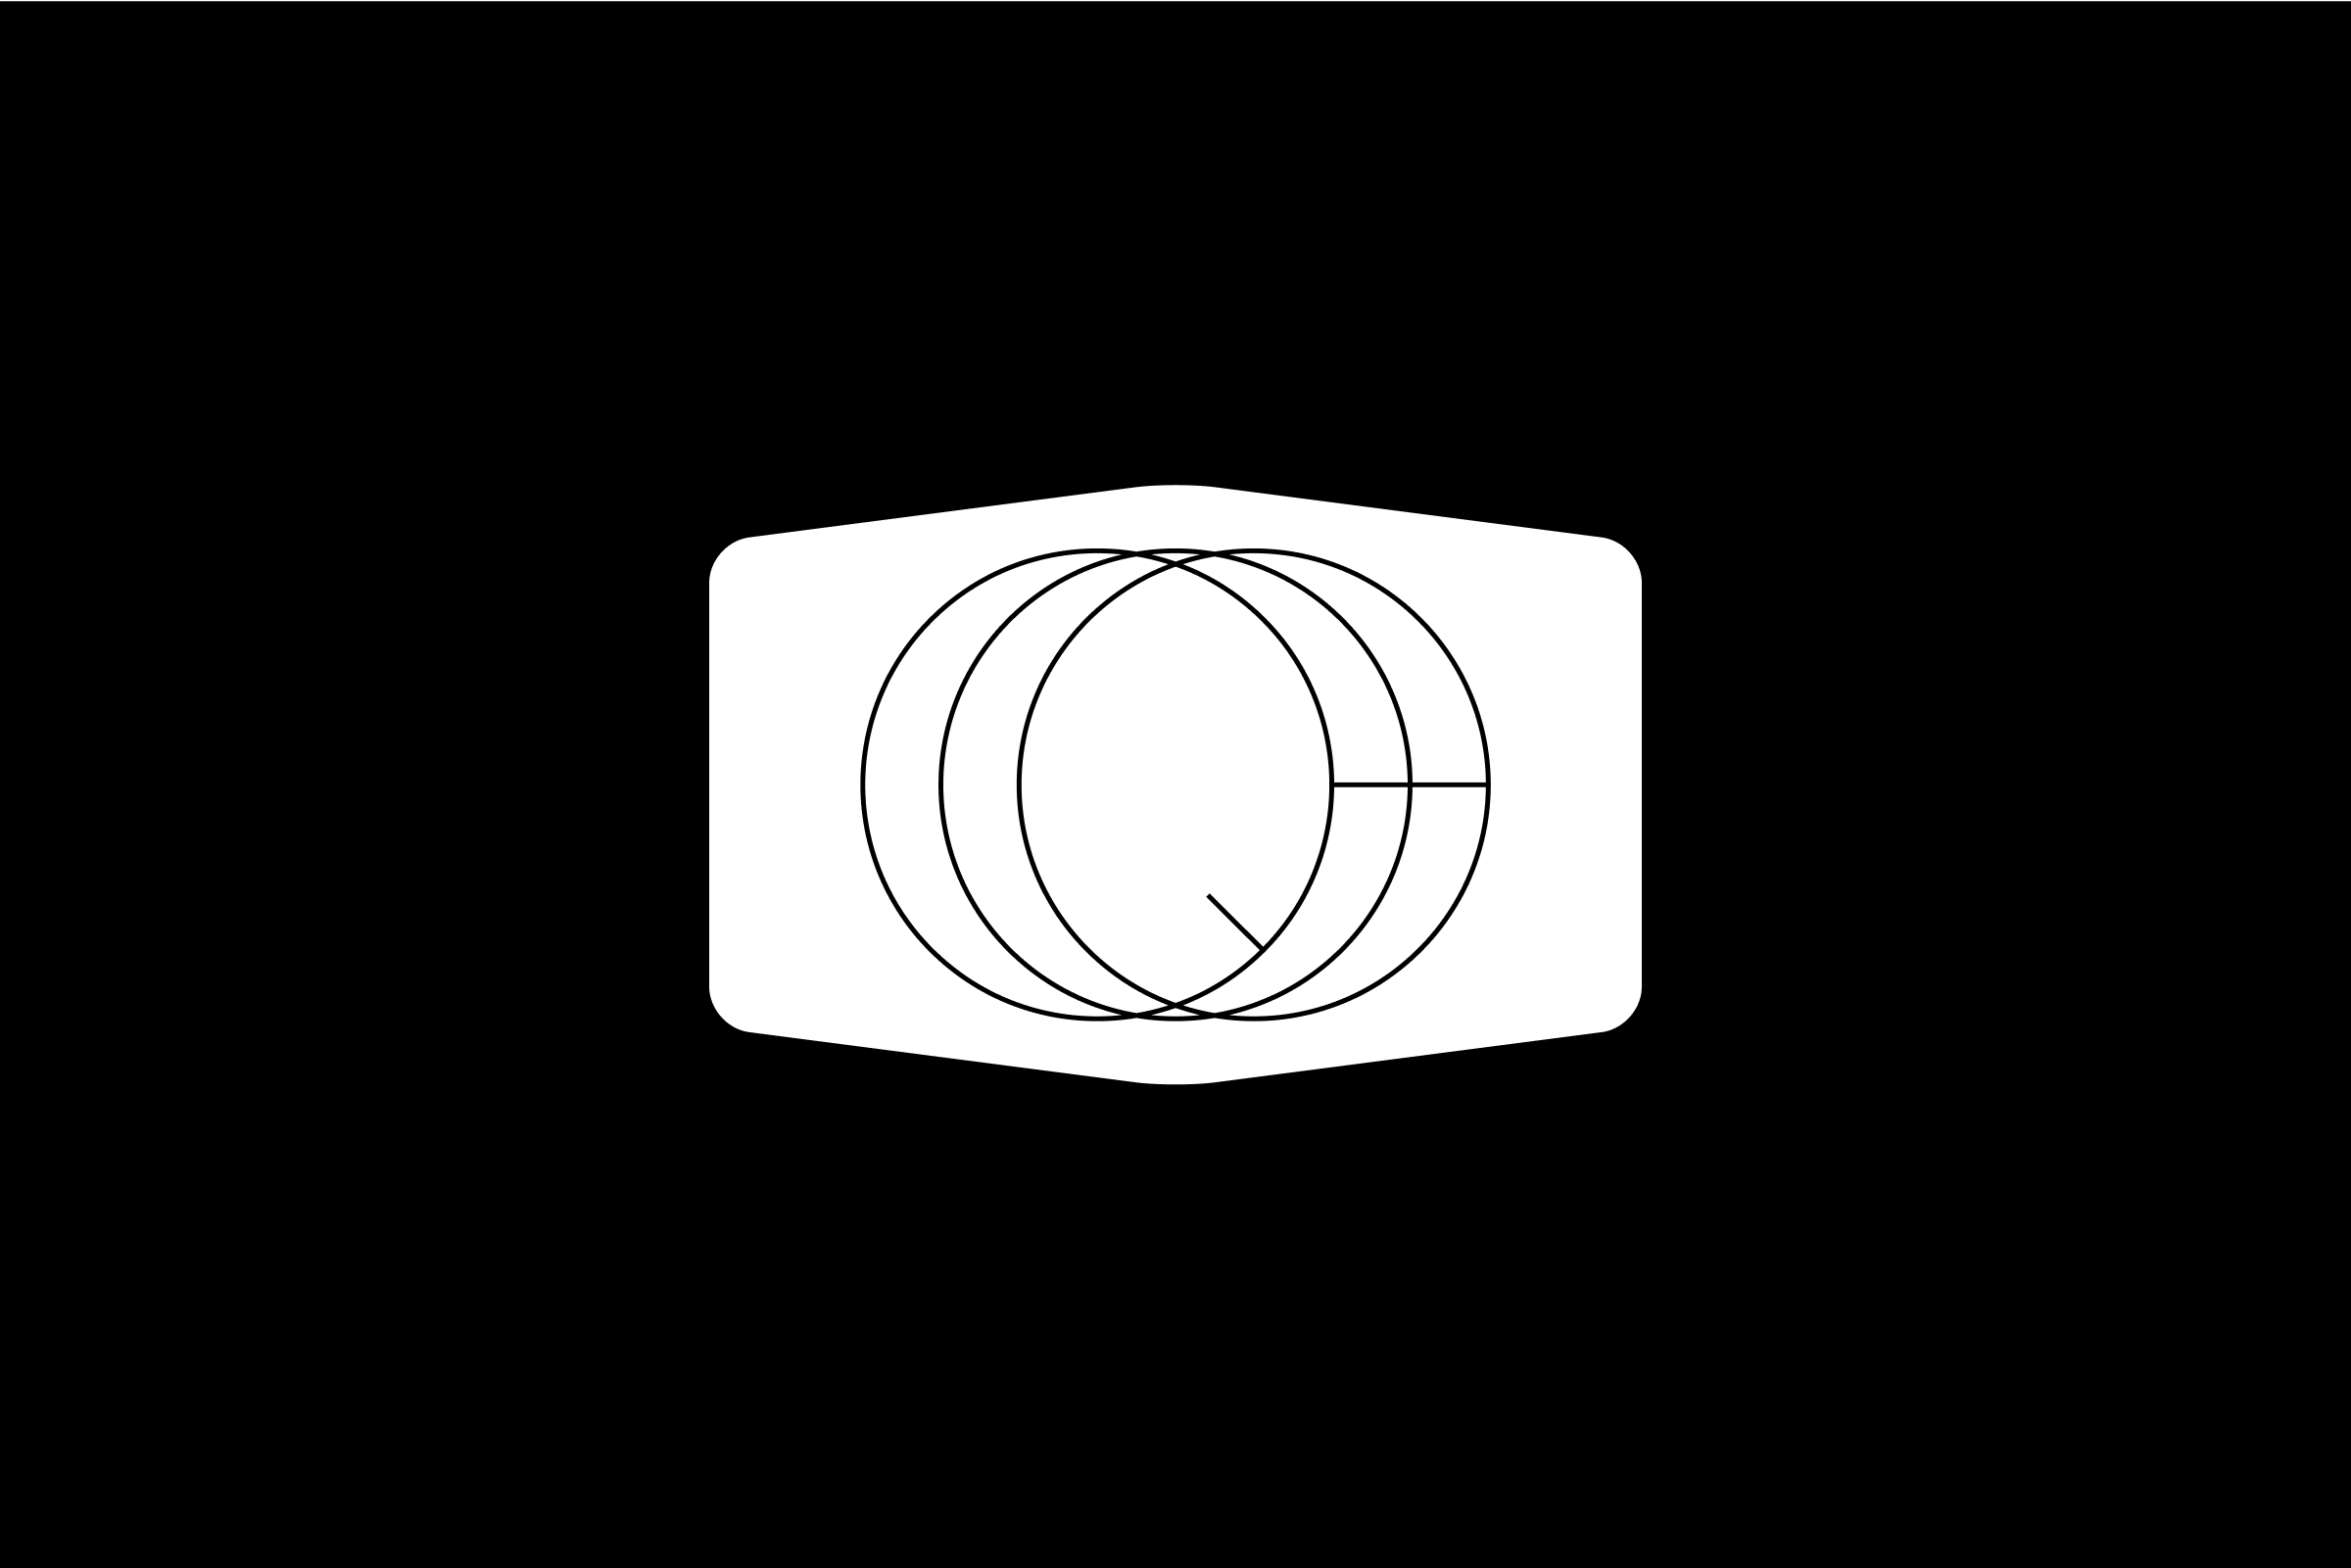 simon-p-coyle-branding-logo-design-2017-queen-east-east